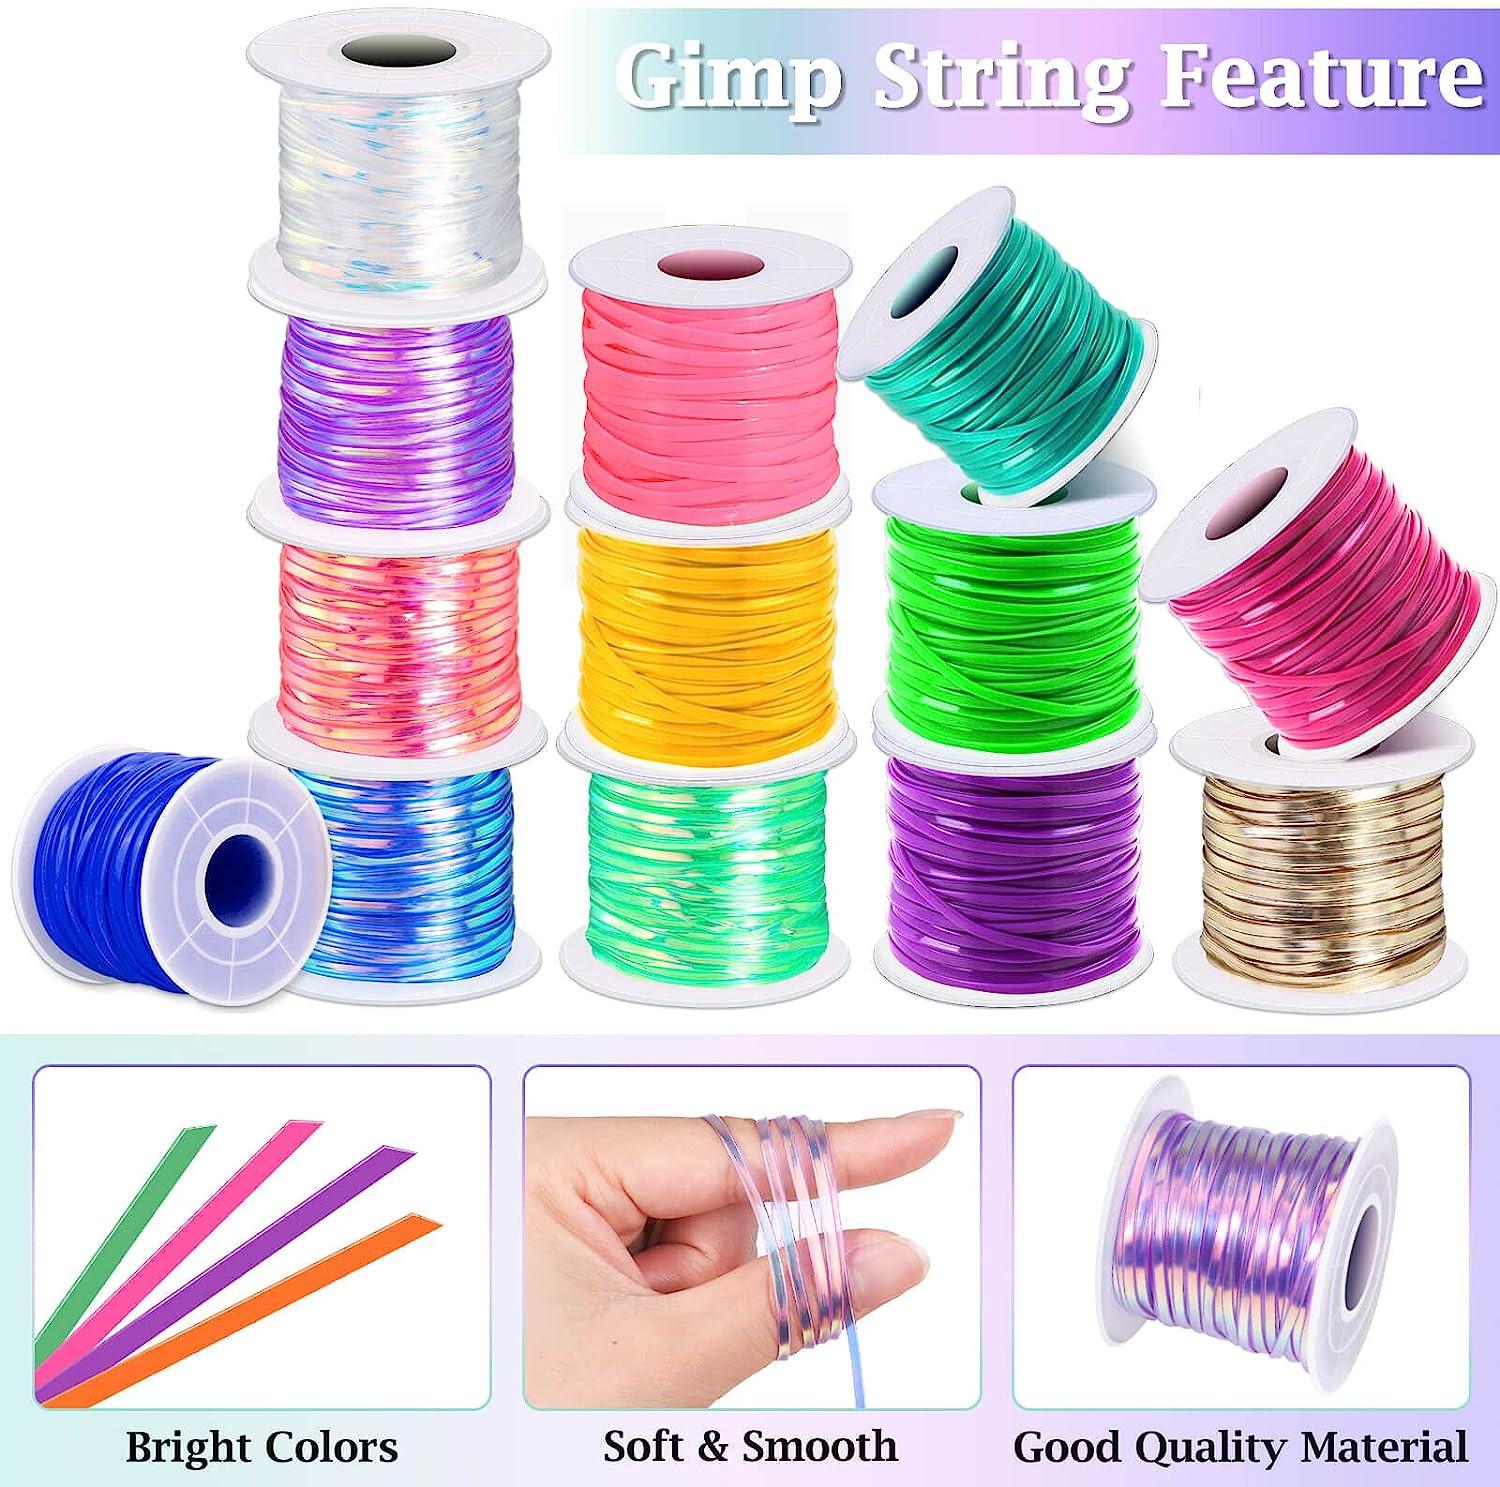  Plastic String Rolls